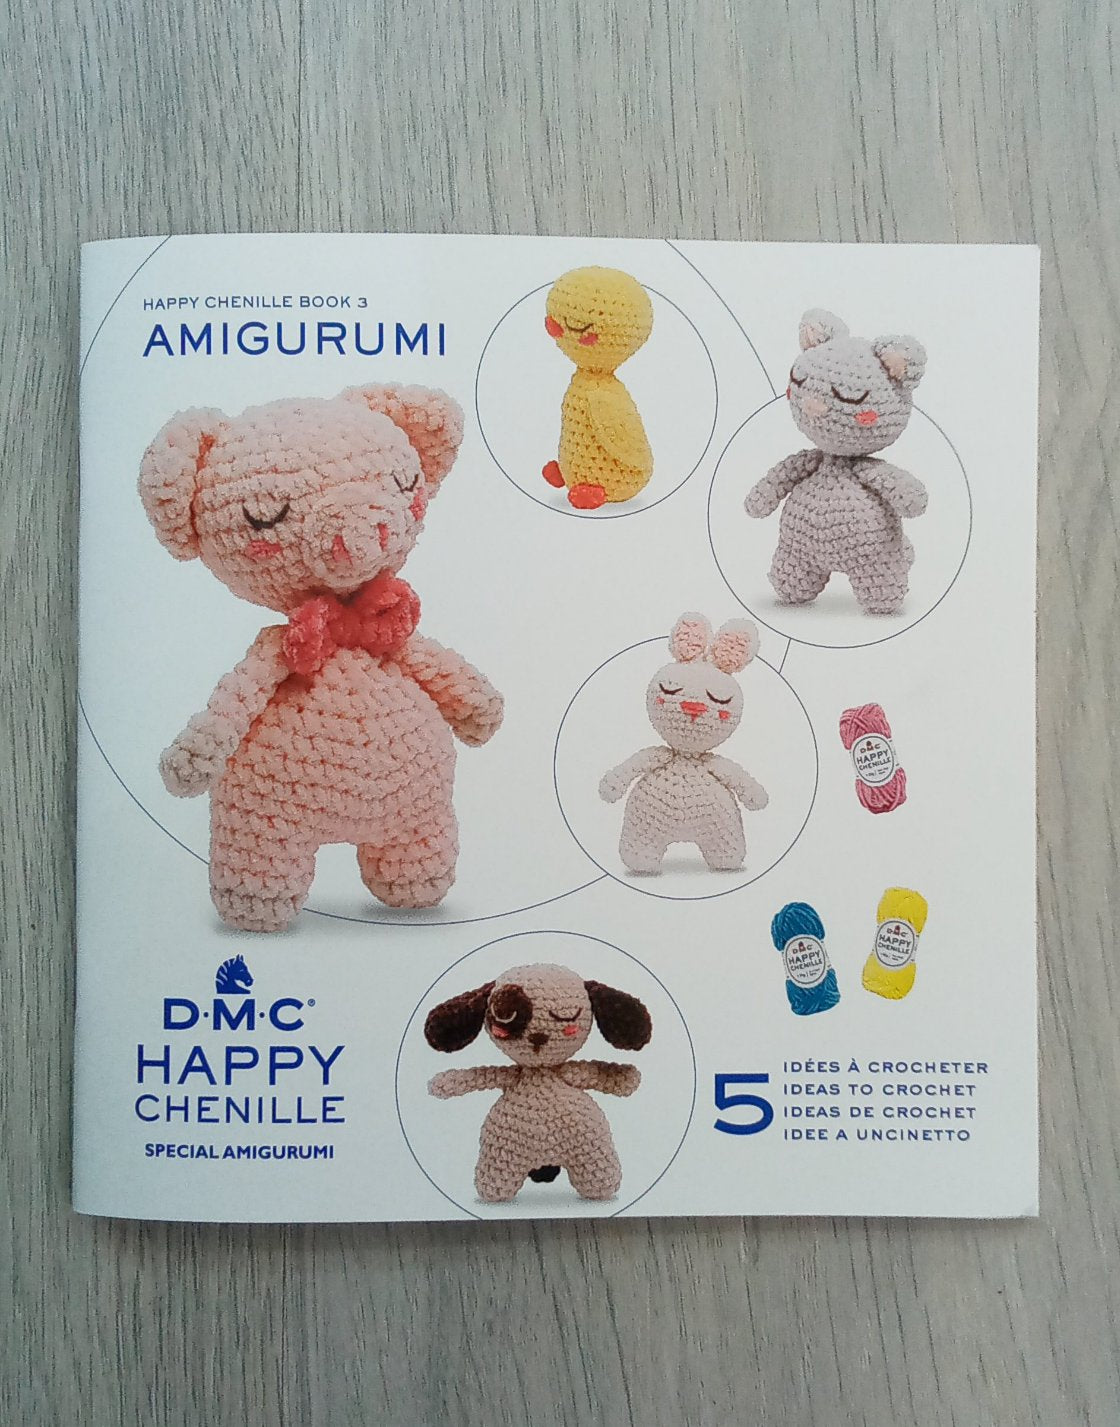 Schemi amigurumi - angels style shop hobbistica e materiali creativi 